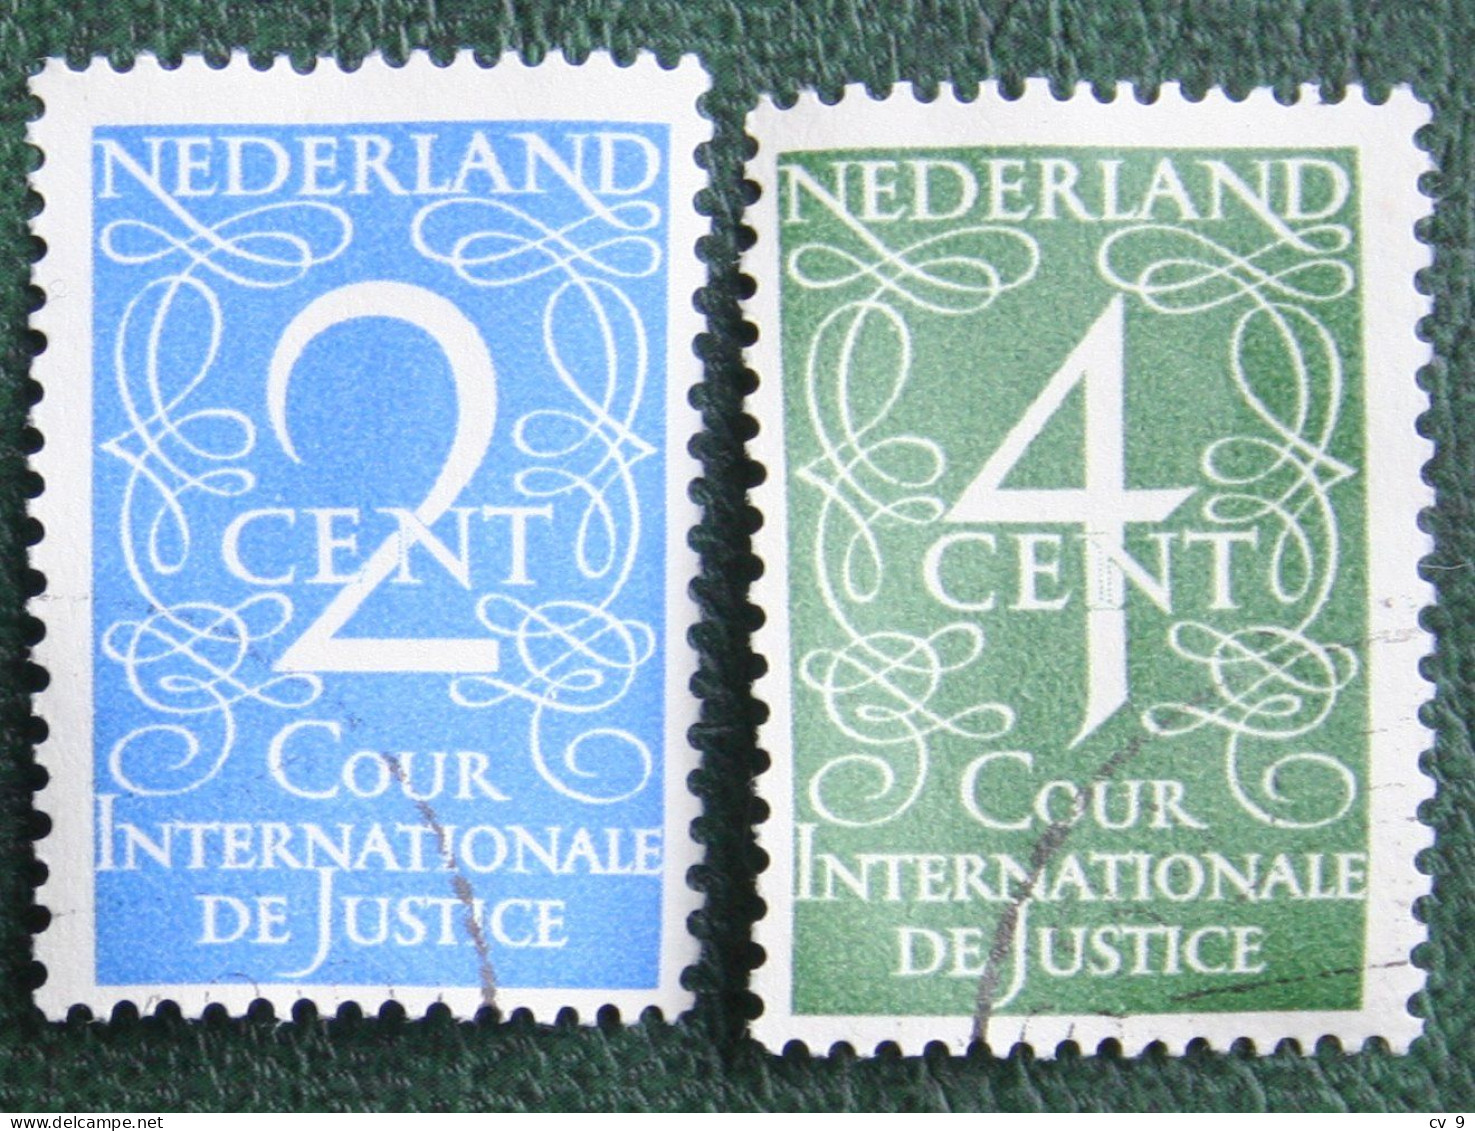 Dienst Cour Internationale De Justice NVPH D25-D26 D 25 (Mi 25-26) 1950 Gestempeld / Used NEDERLAND / NIEDERLANDE - Dienstmarken